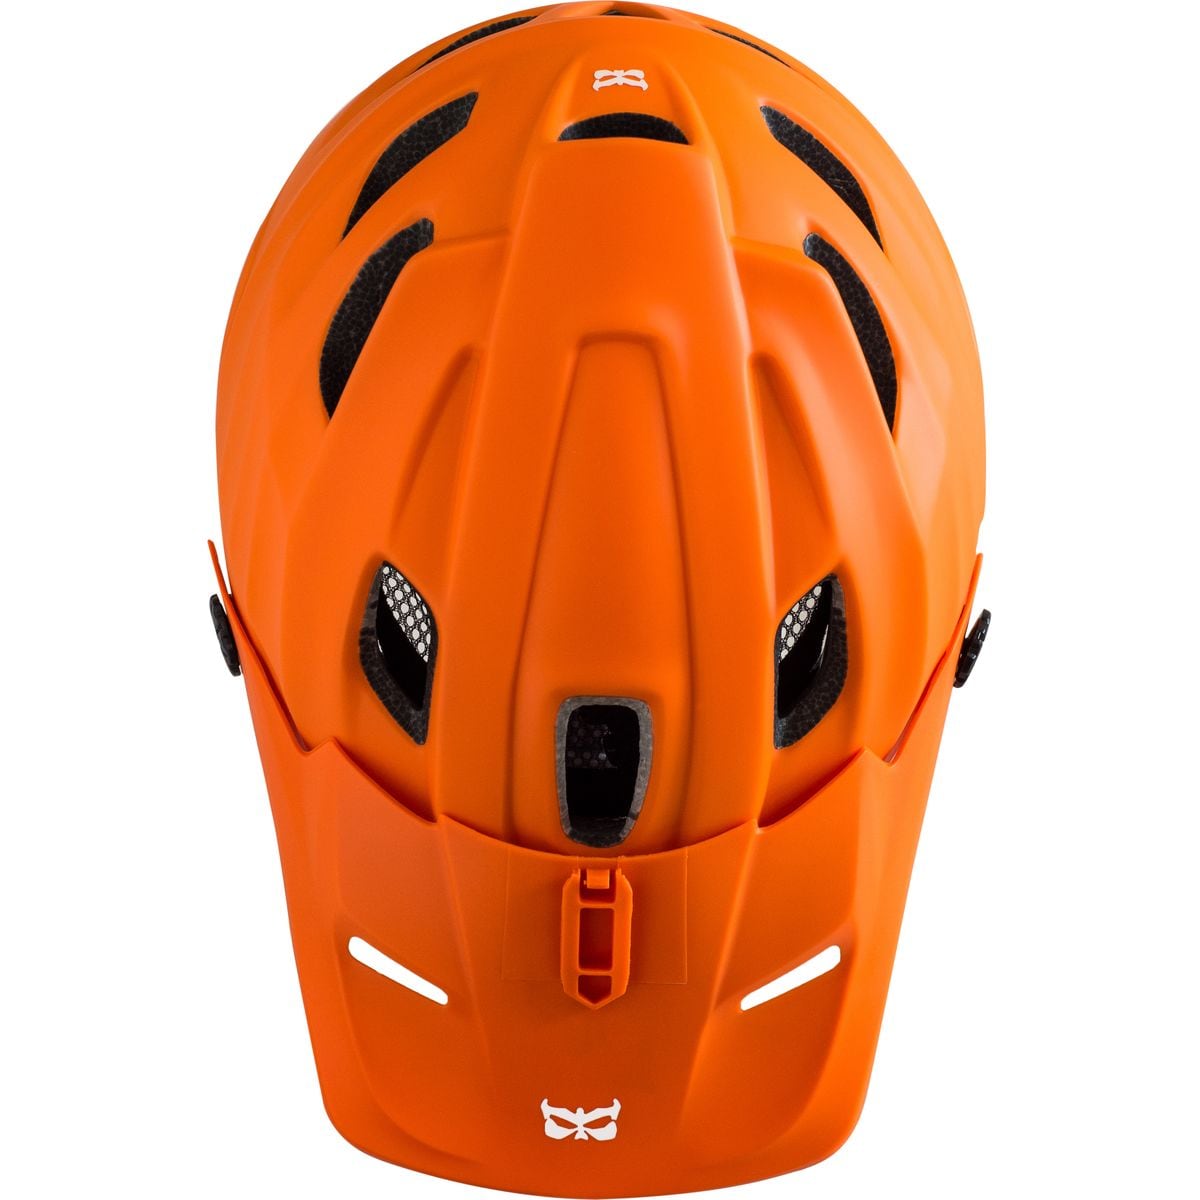 Kali Protectives Maya Enduro Helmet | eBay